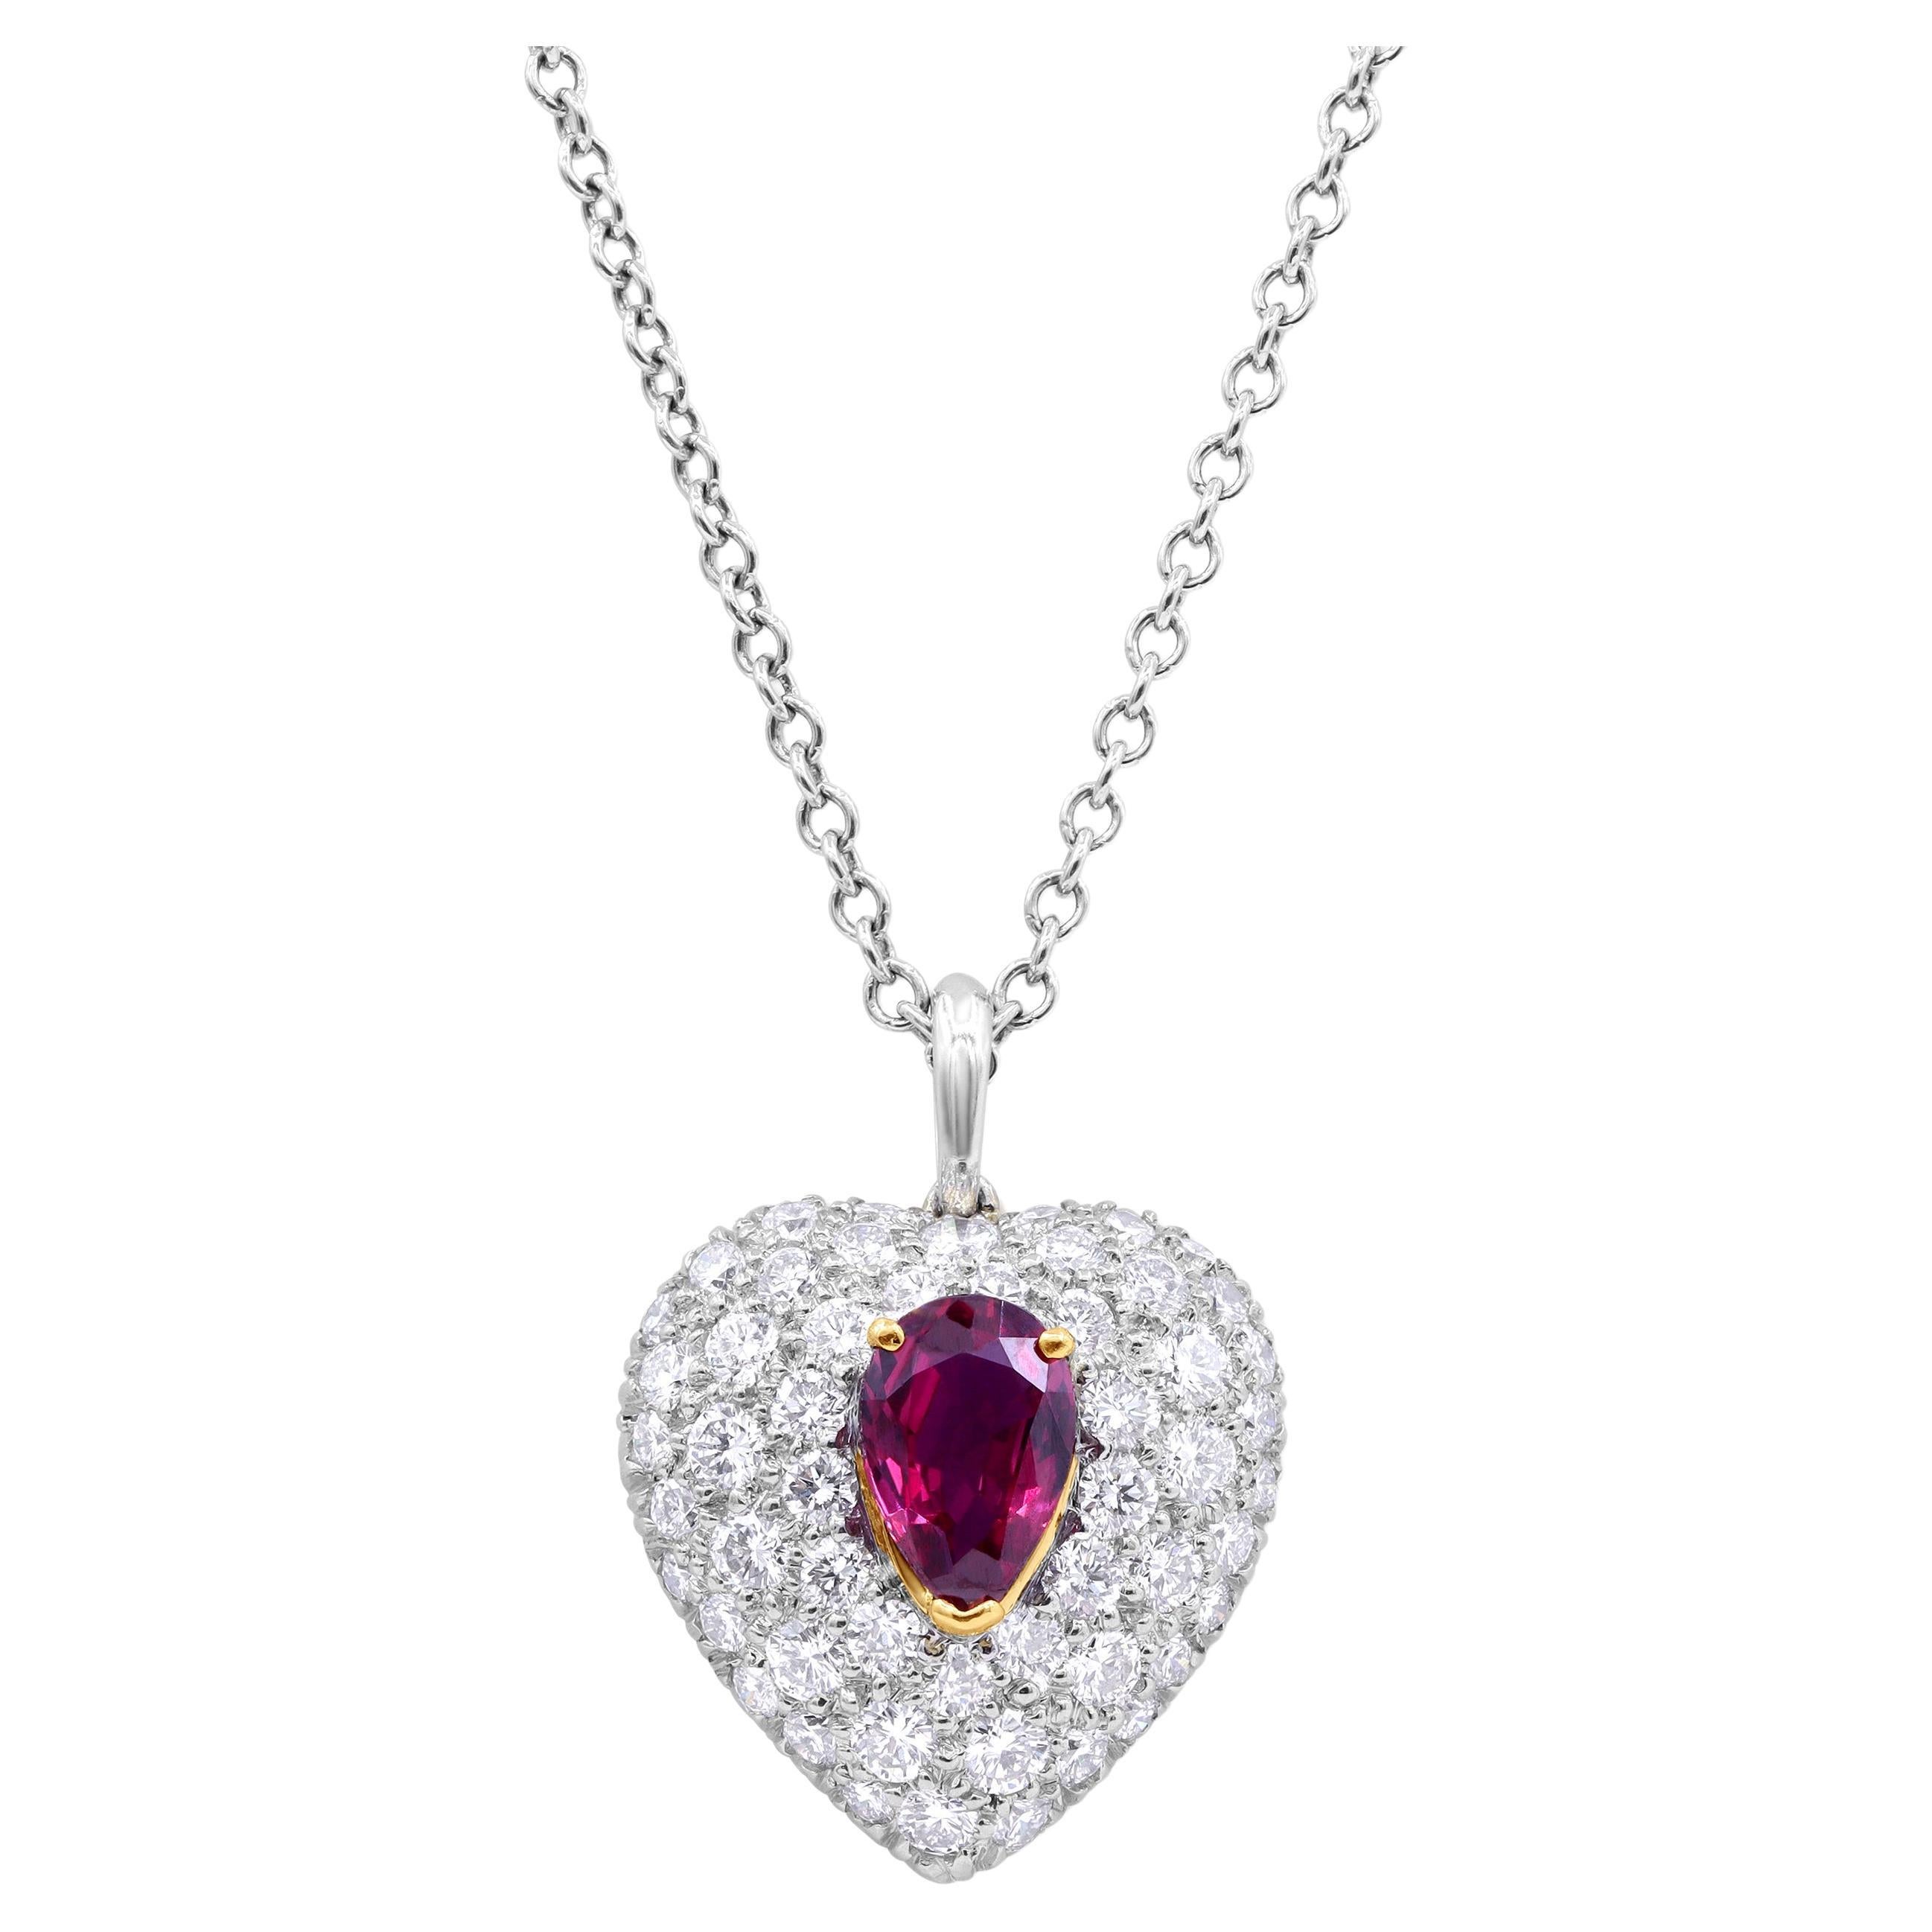 Oscar Heyman Ruby & Diamond Heart Shaped Pendant Necklace